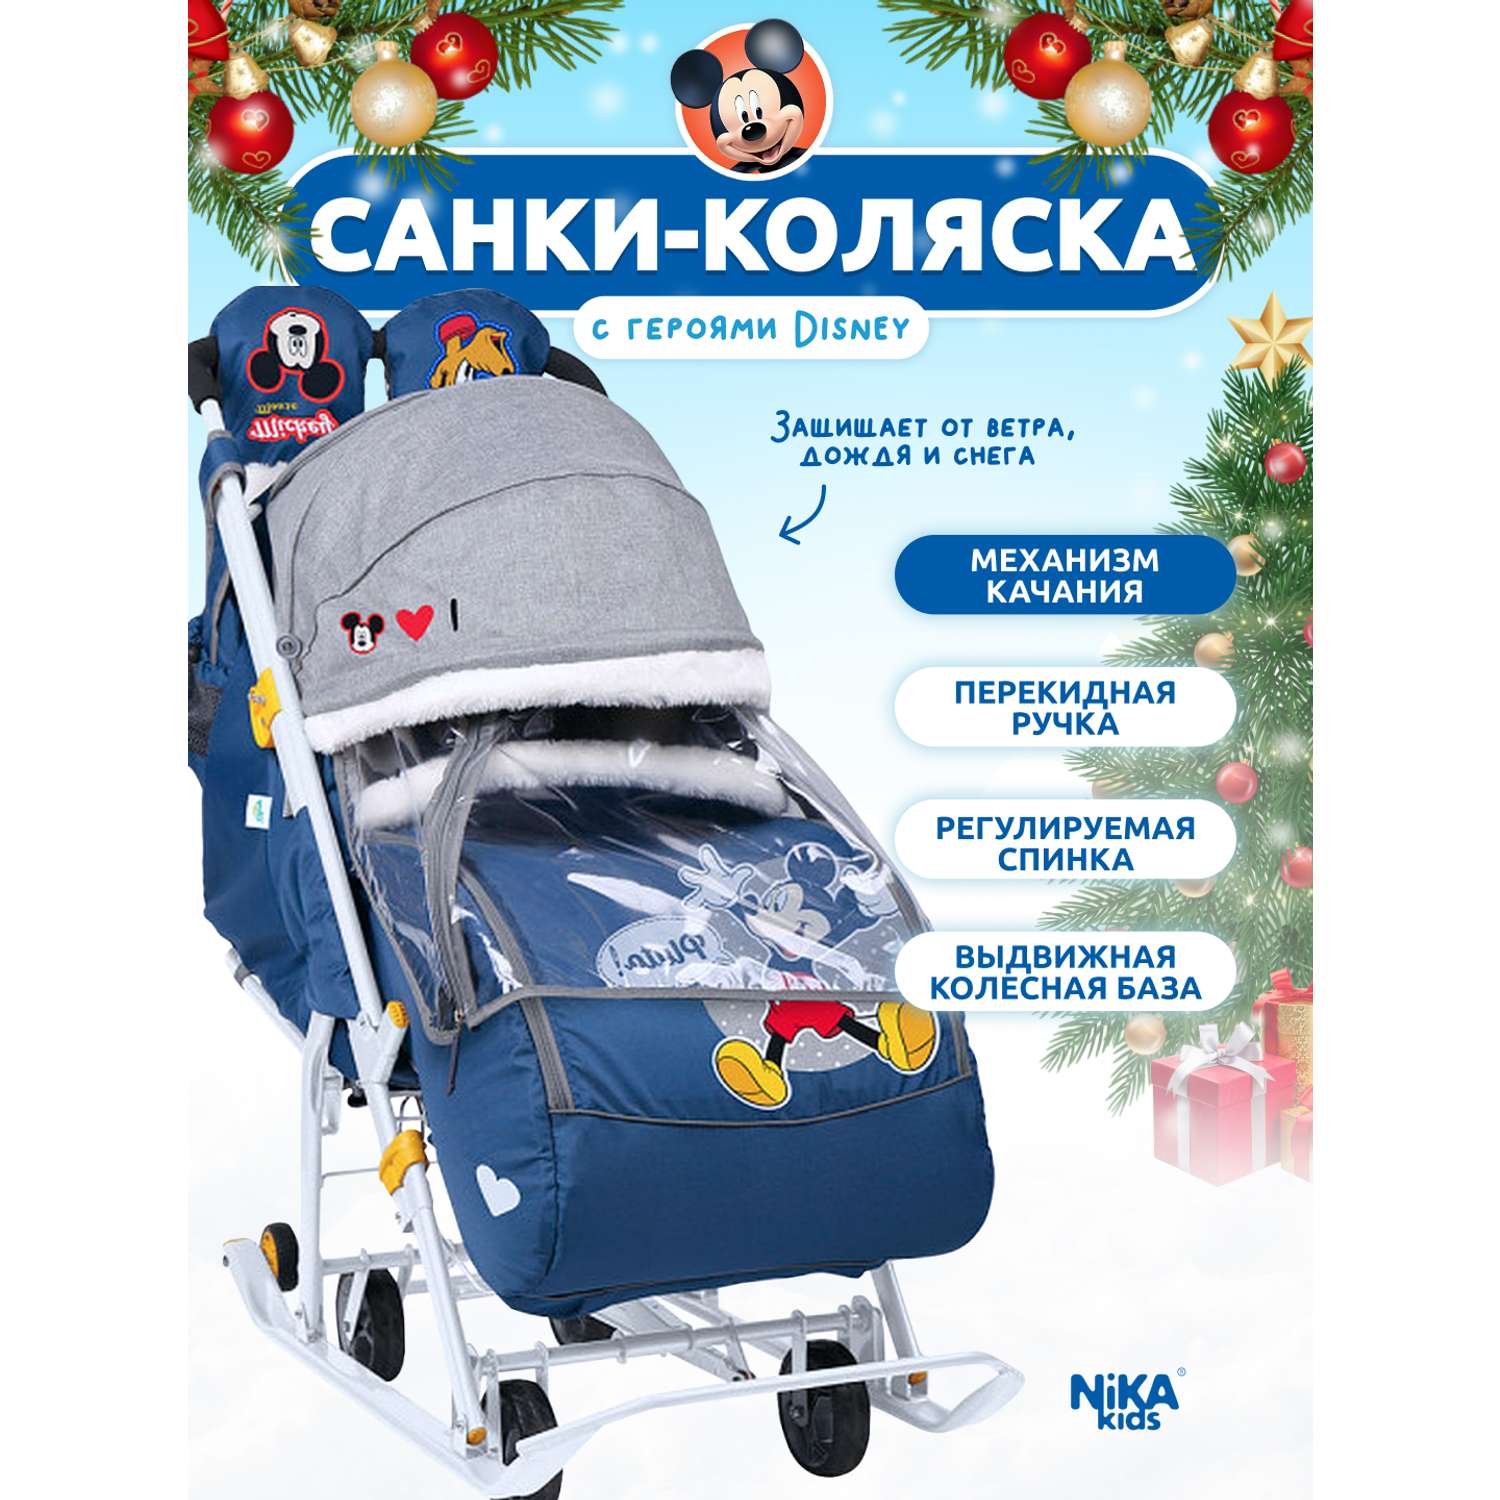 Зимние санки-коляска Nika kids для детей - фото 1